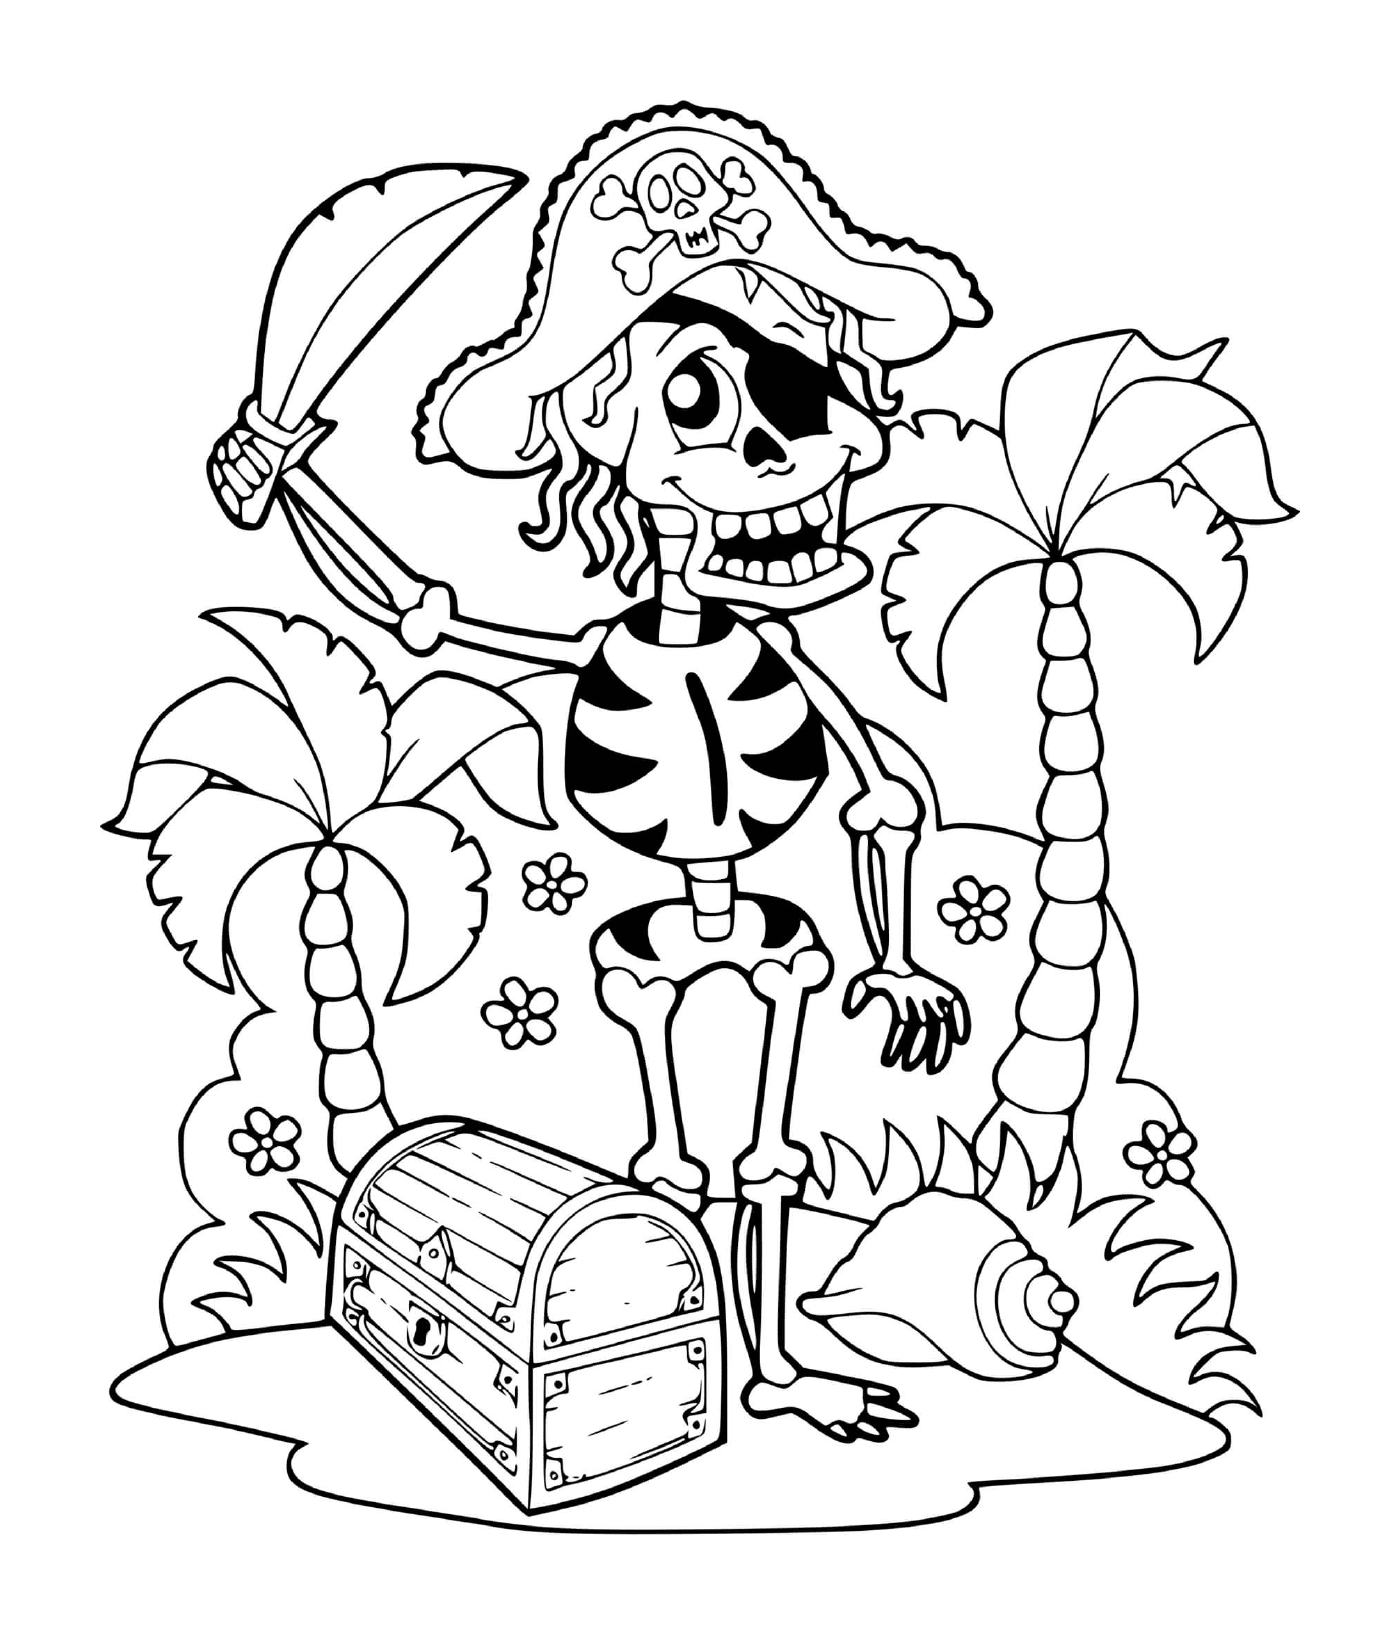  Pirate skeleton with treasure 